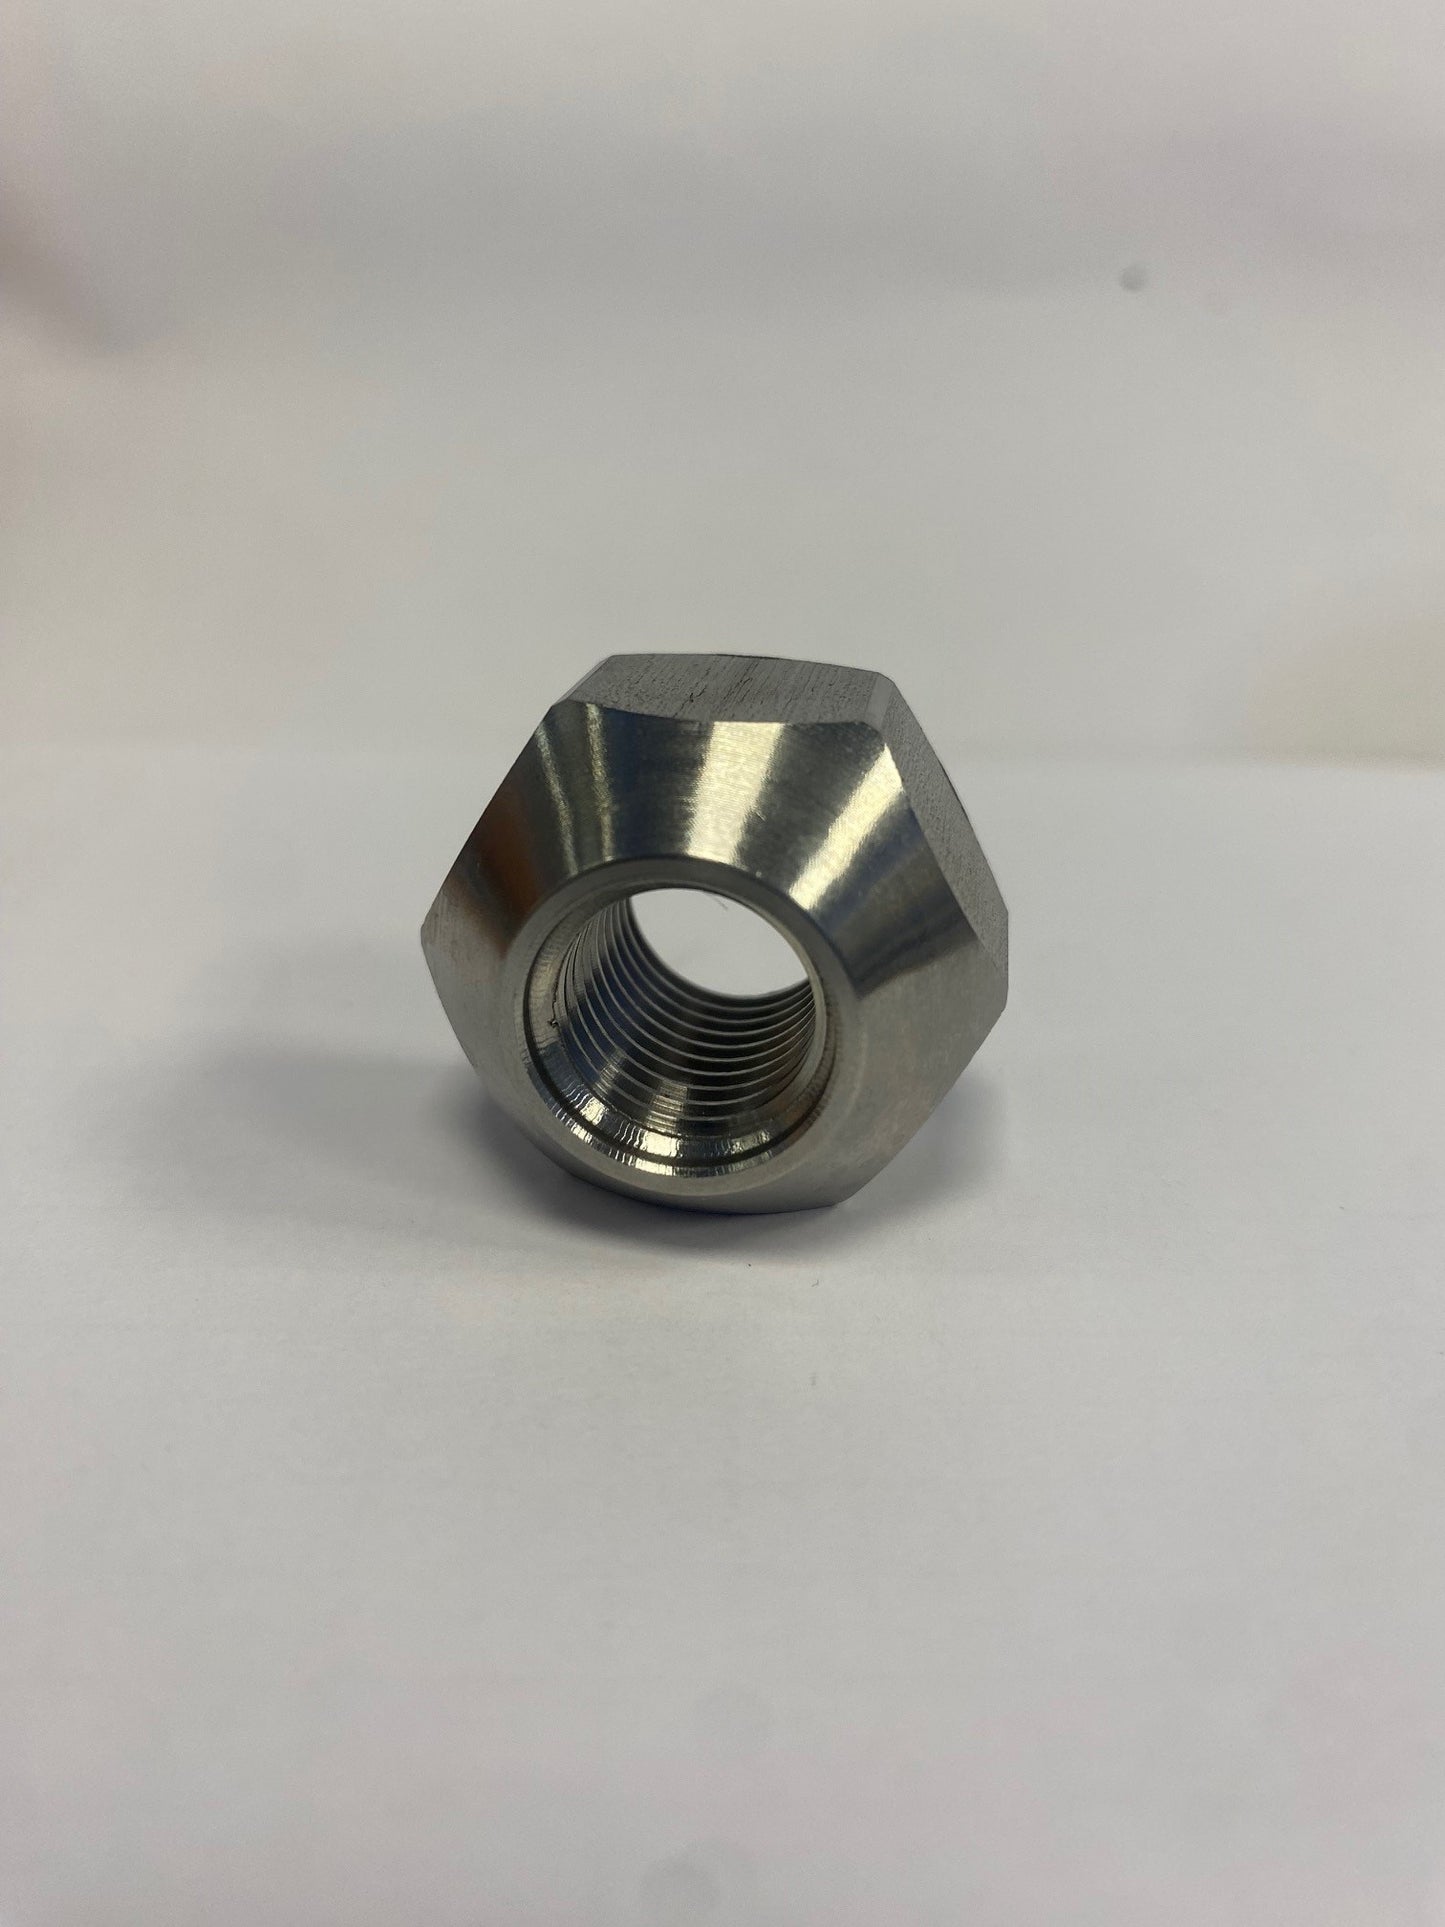 20 x Stainless Steel Wheel Nuts – Series 1, Series 2 & Series 2a-g. (3270)